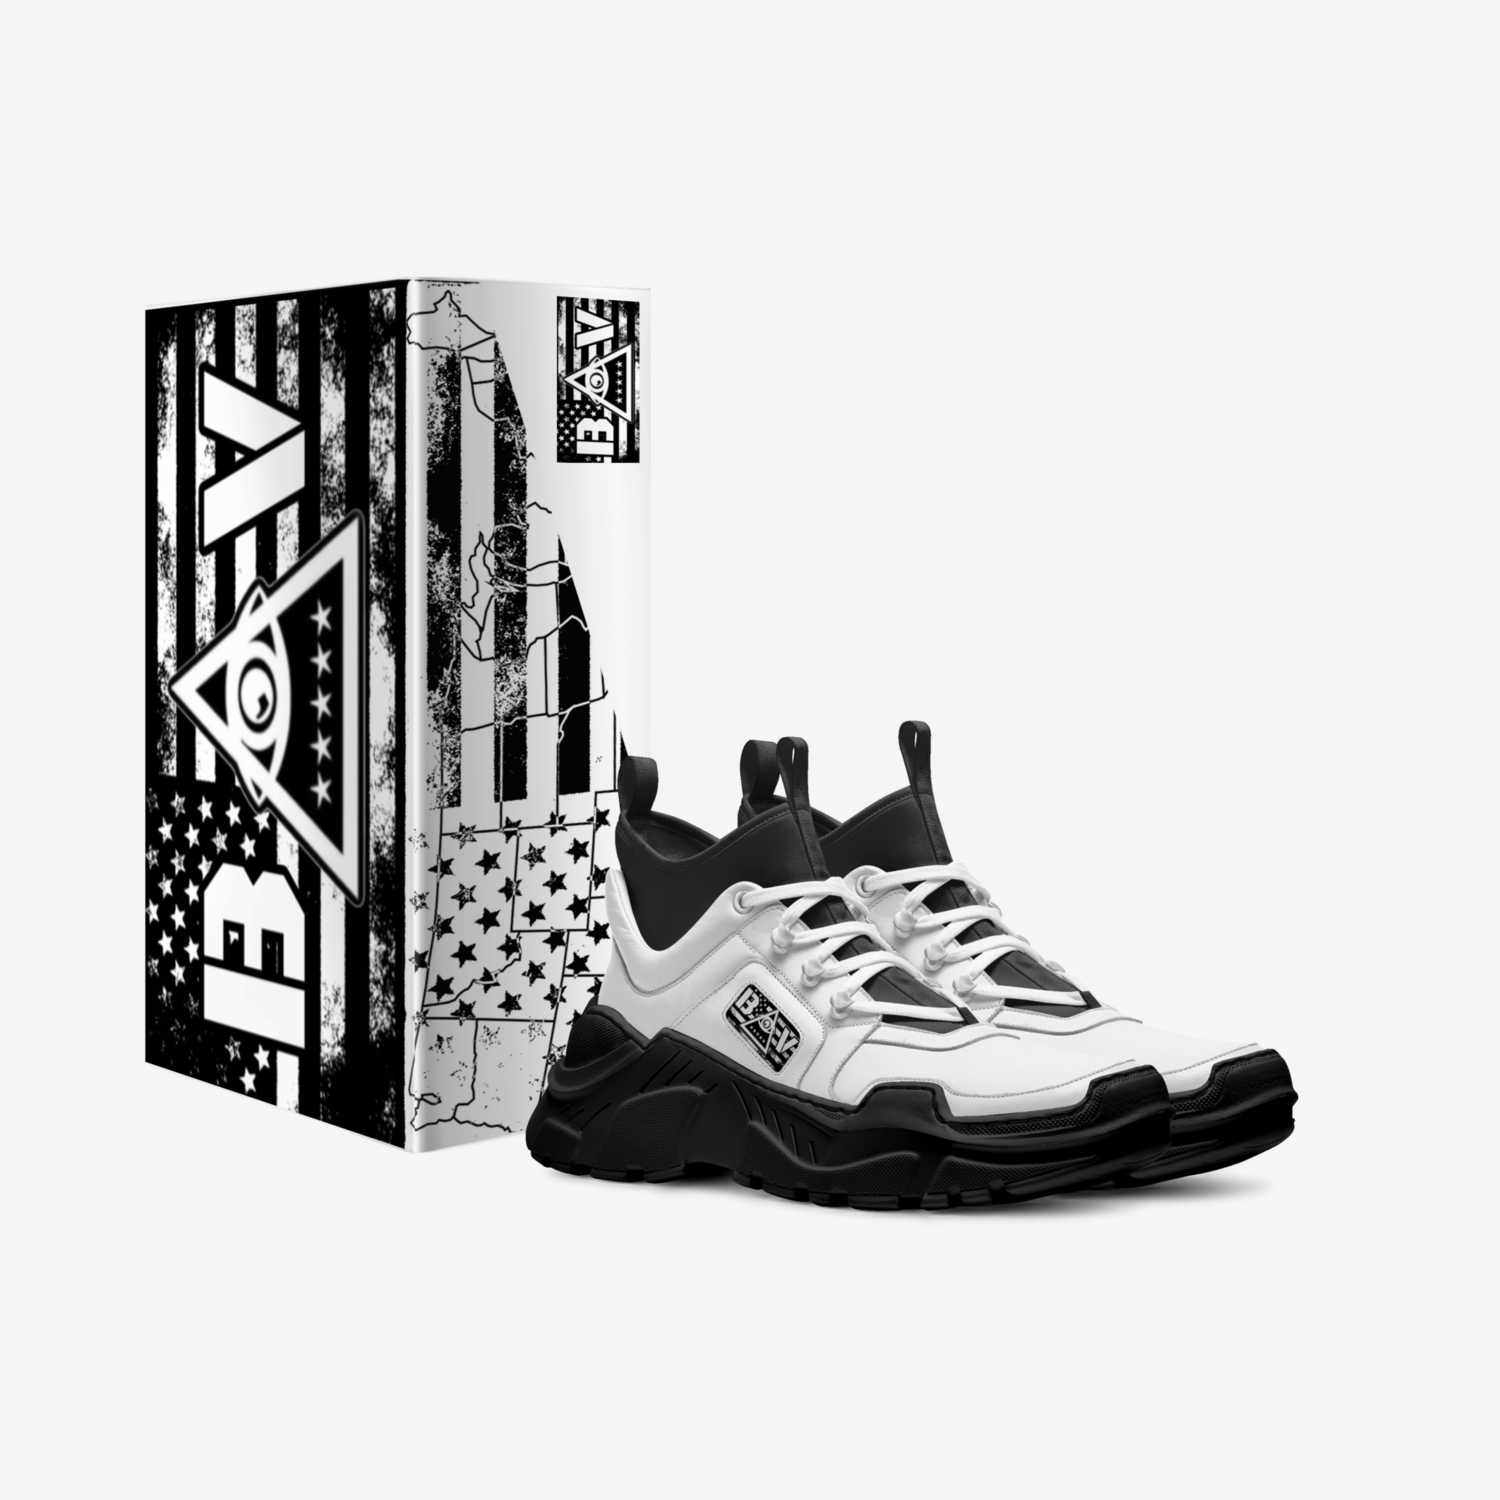 B.O.V custom made in Italy shoes by Redstar Mafia | Box view